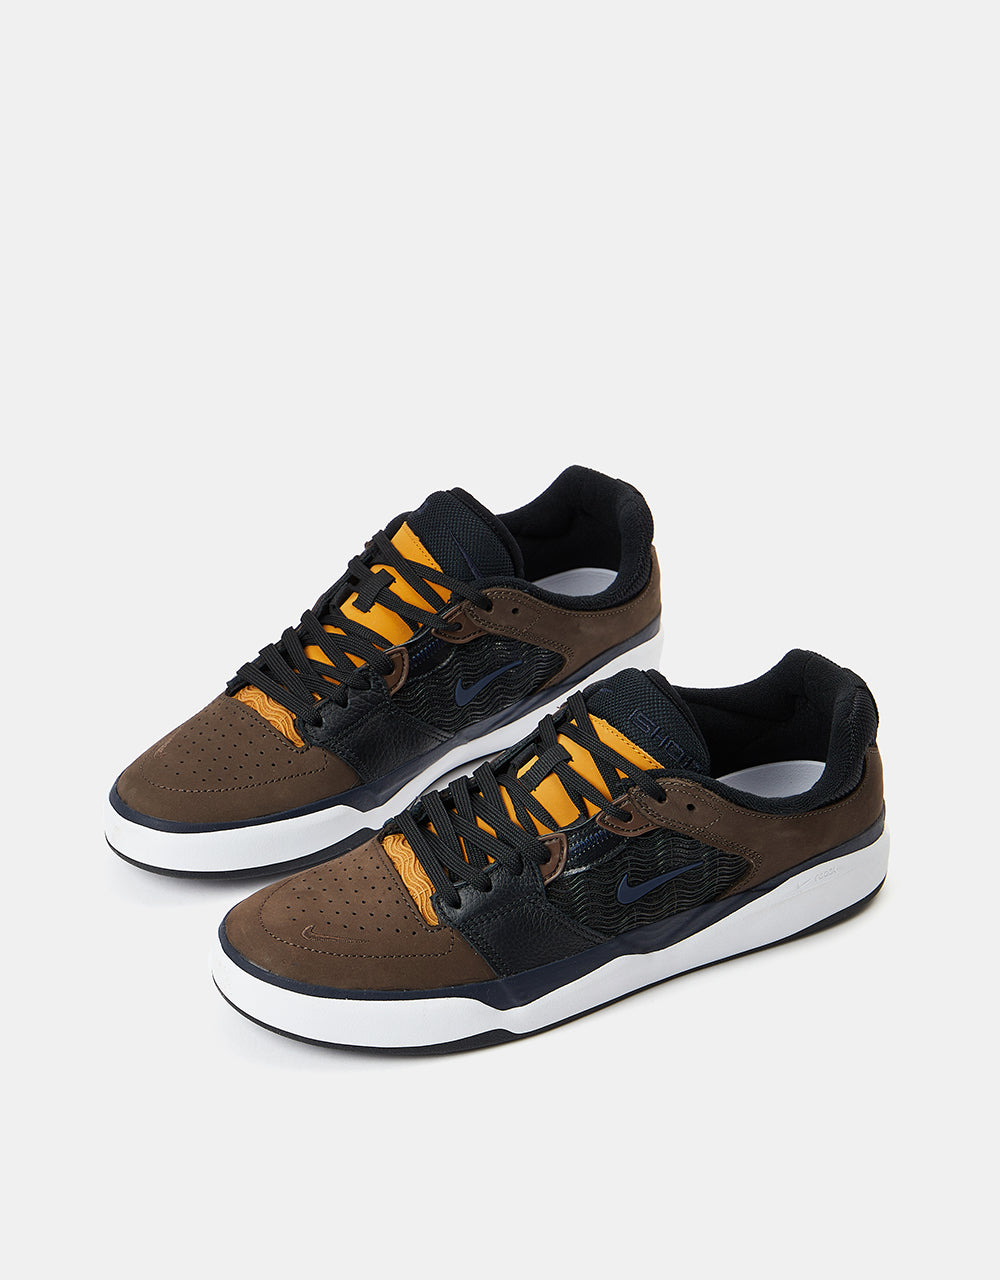 Nike SB Ishod Premium Skate Shoes - Baroque Brown/Obsidian-Black